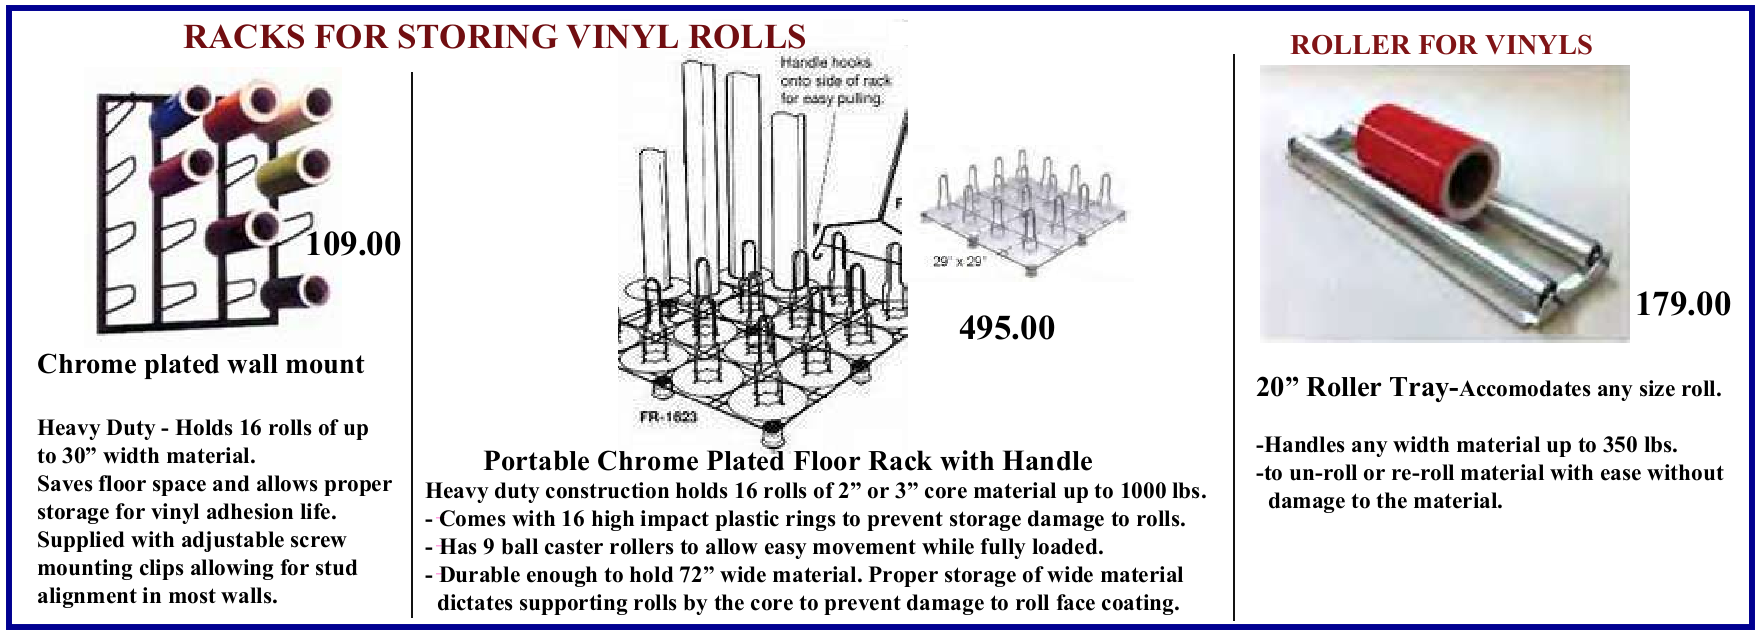 rack storage for vinyls jan 2022 - Racks - Vinyl Storage